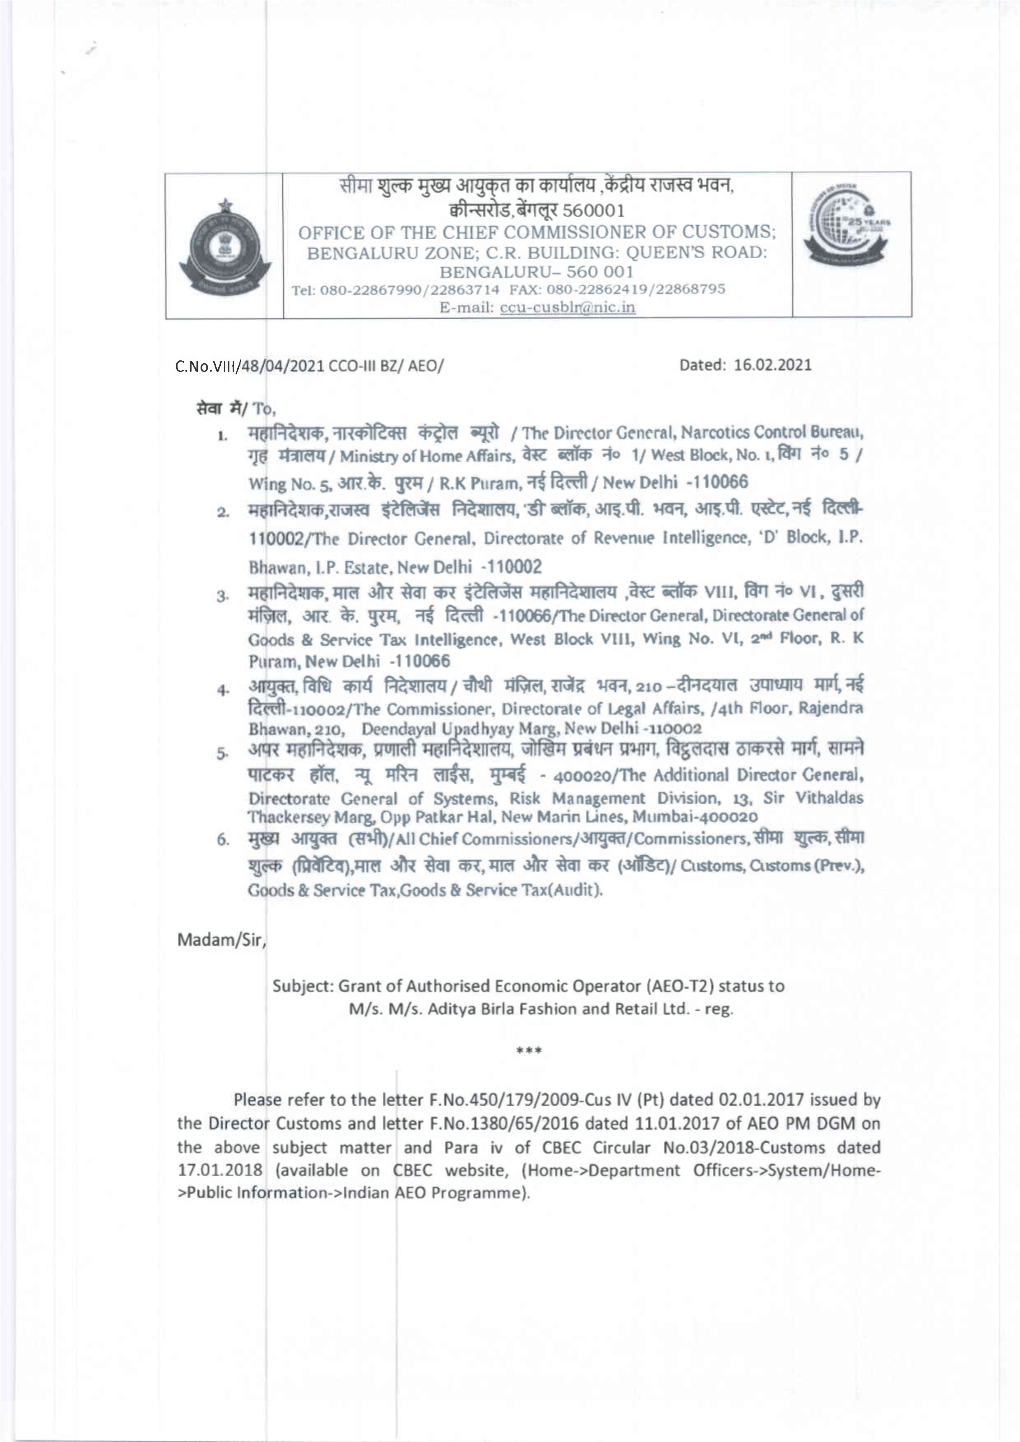 Legal Verification of AEO-T2 of M/S Aditya Birla Fashion and Retail Ltd